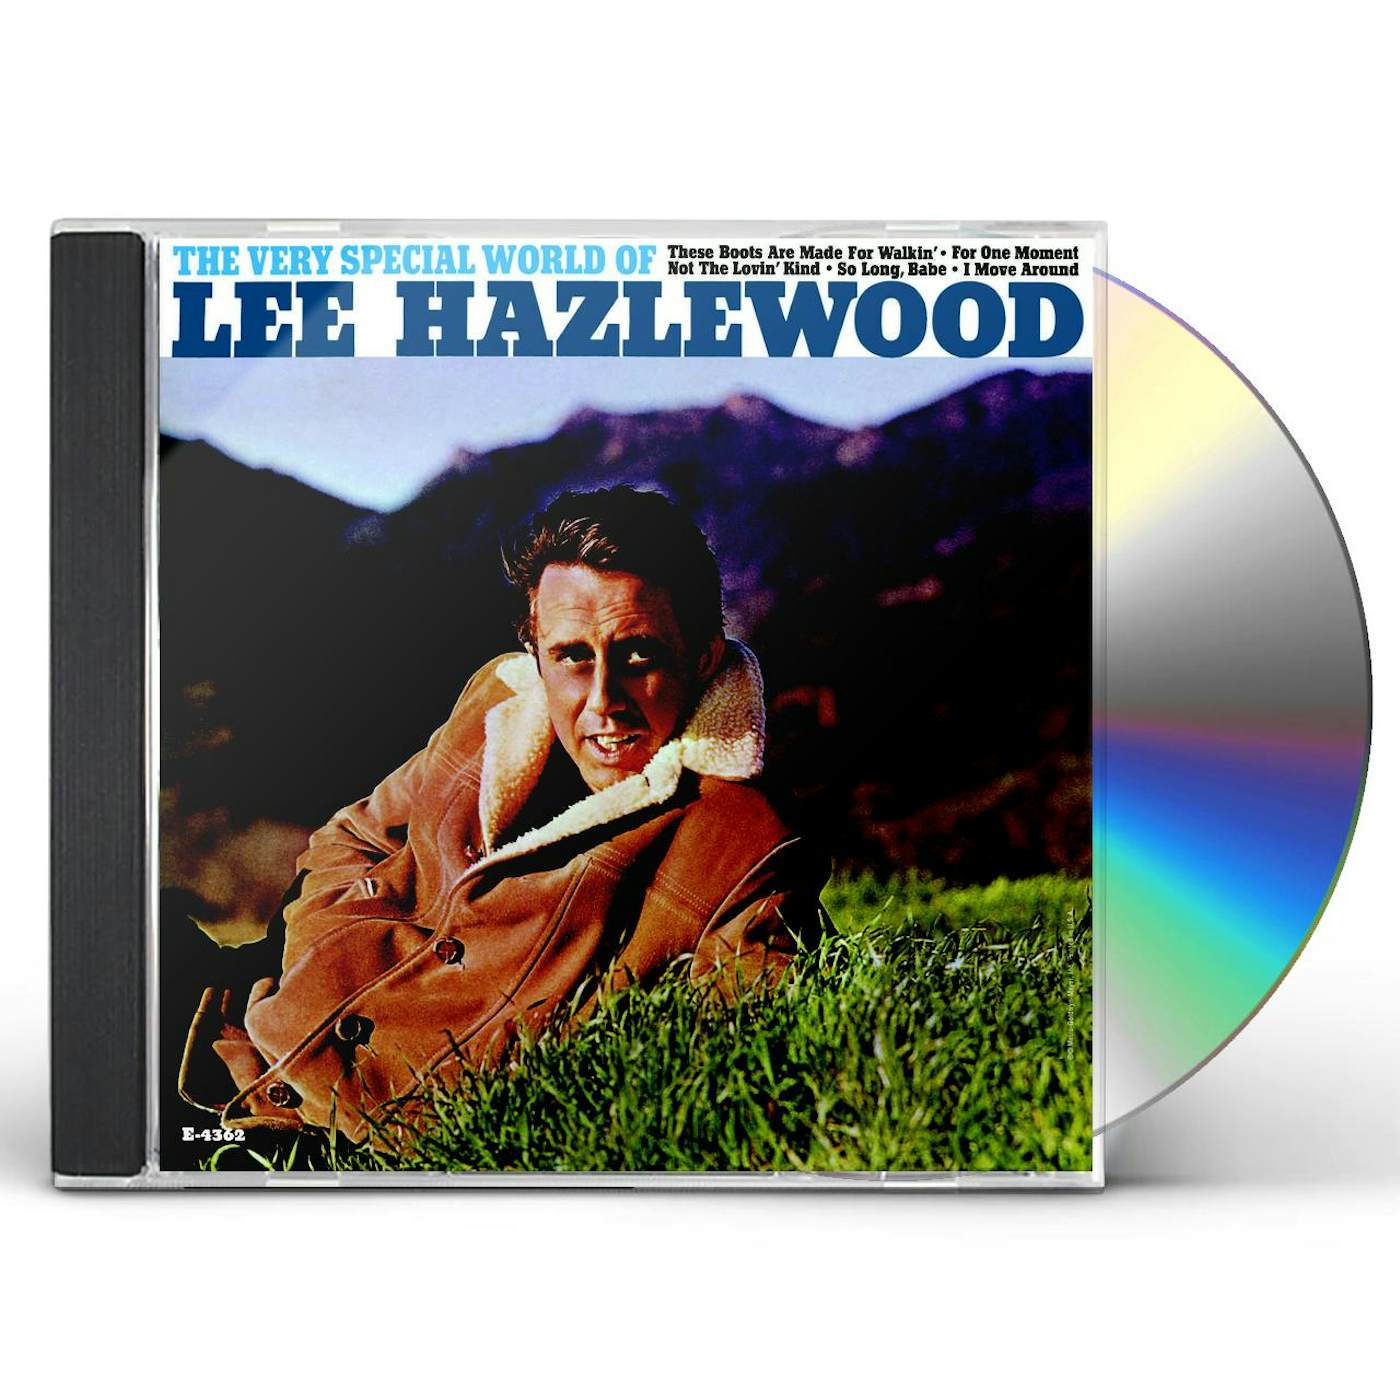 VERY SPECIAL WORLD OF LEE HAZLEWOOD CD